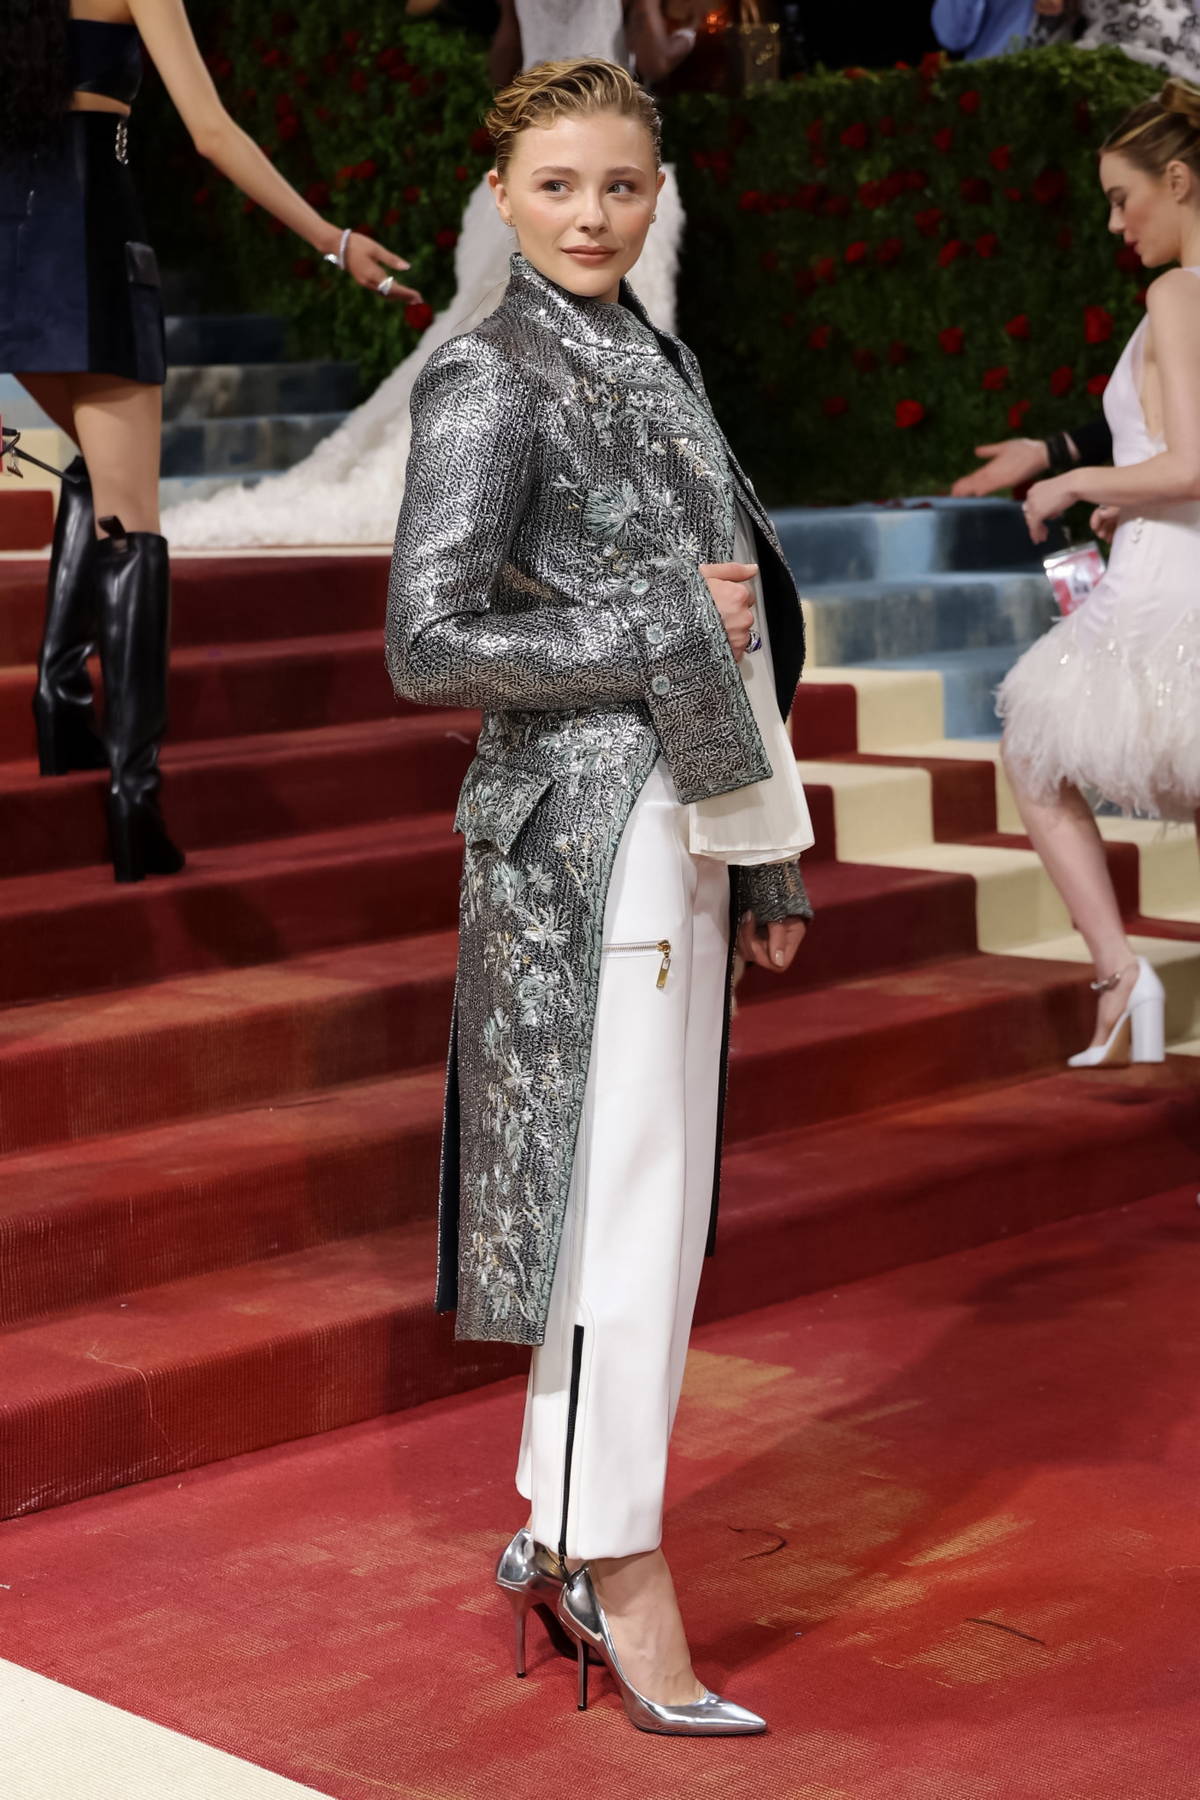 Chloe Grace Moretz In Coach - 2015 Met Gala - Red Carpet Fashion Awards